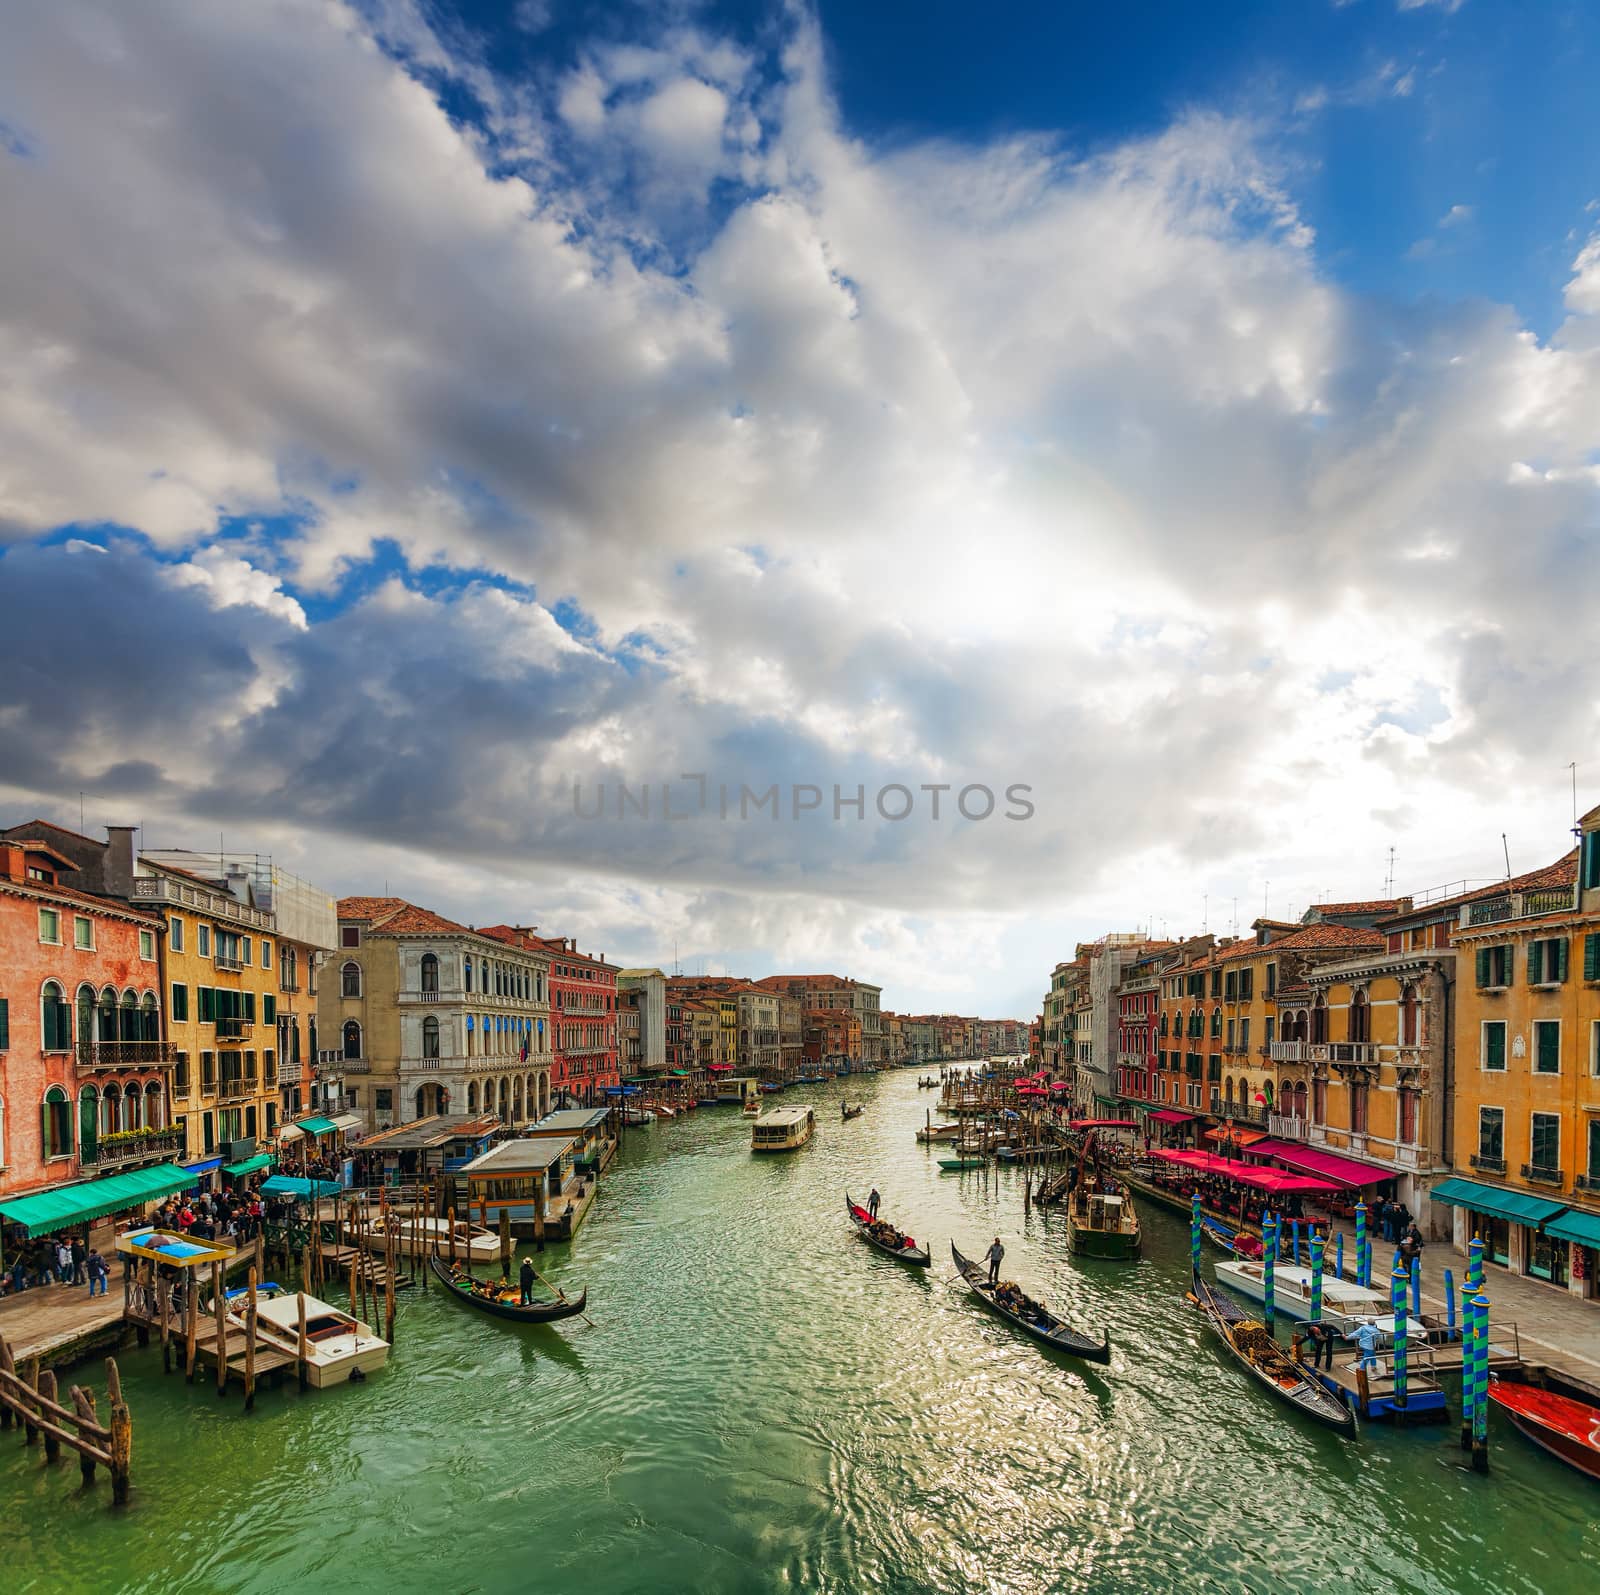  Venice - gondolas and boats on the Grand Canal. by vladimir_sklyarov